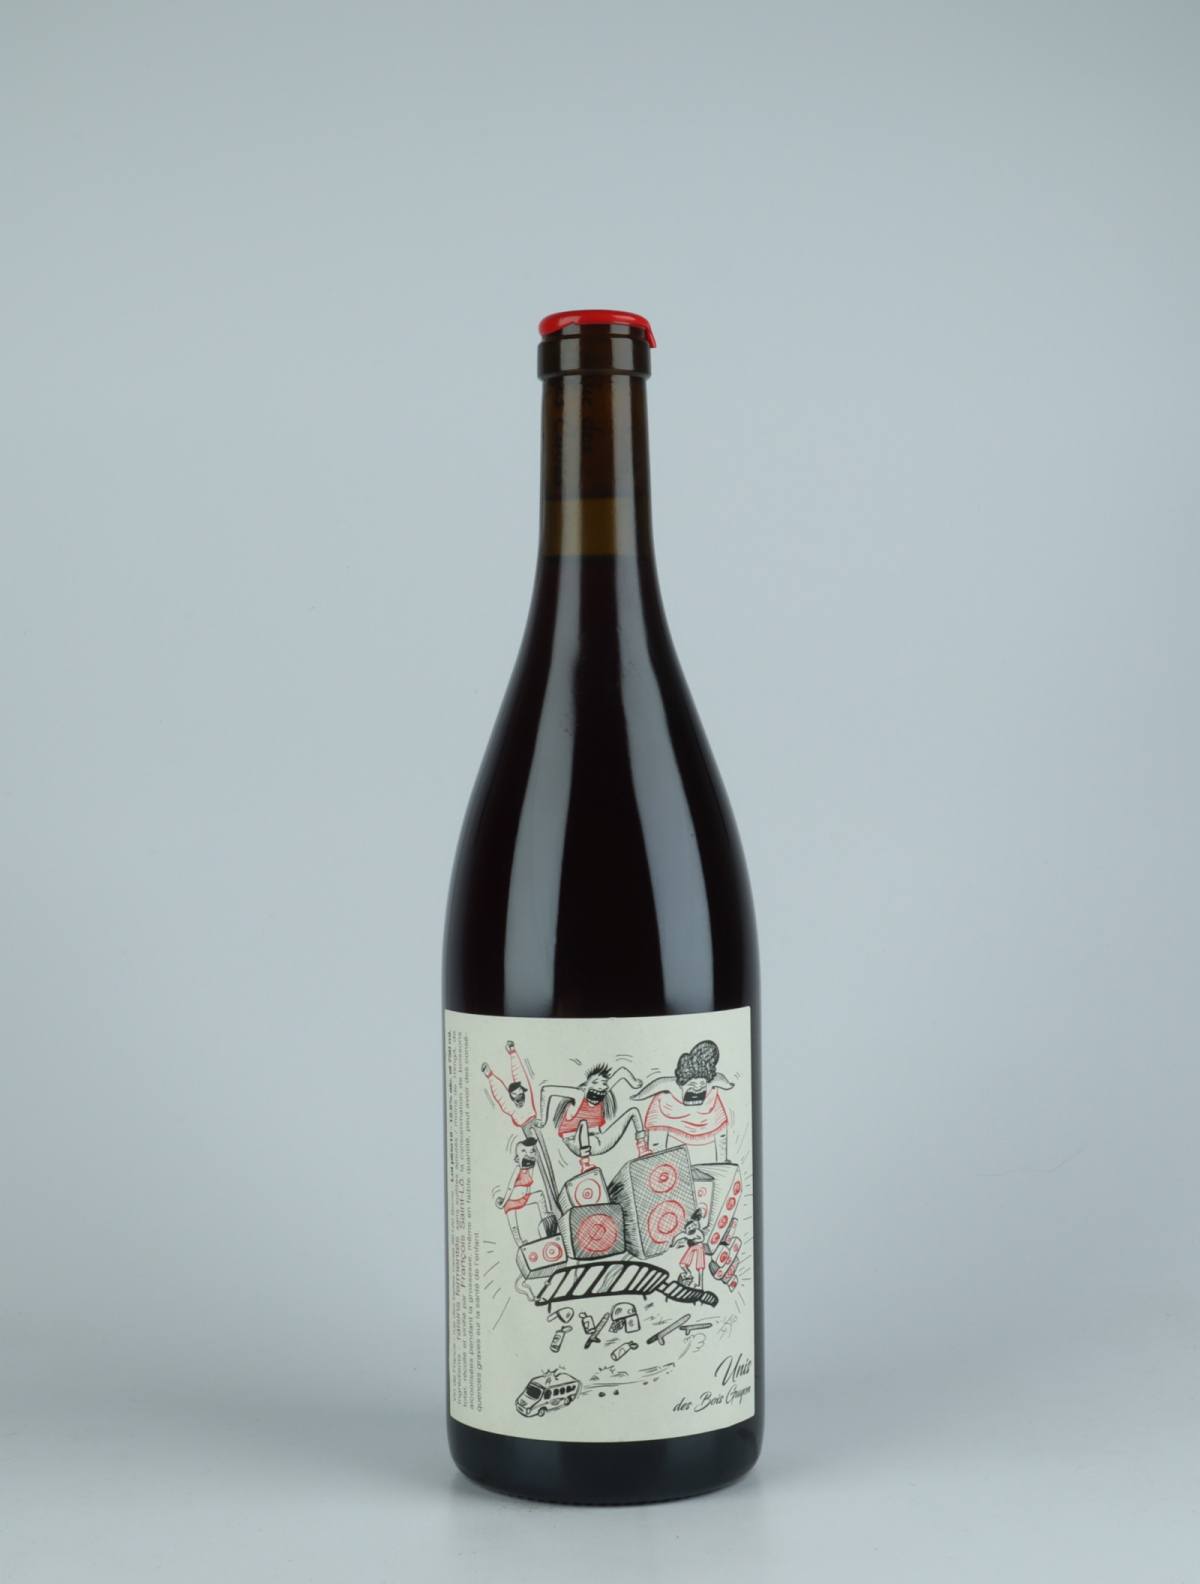 A bottle 2019 Pineau d'Aunis Red wine from François Saint-Lô, Loire in France